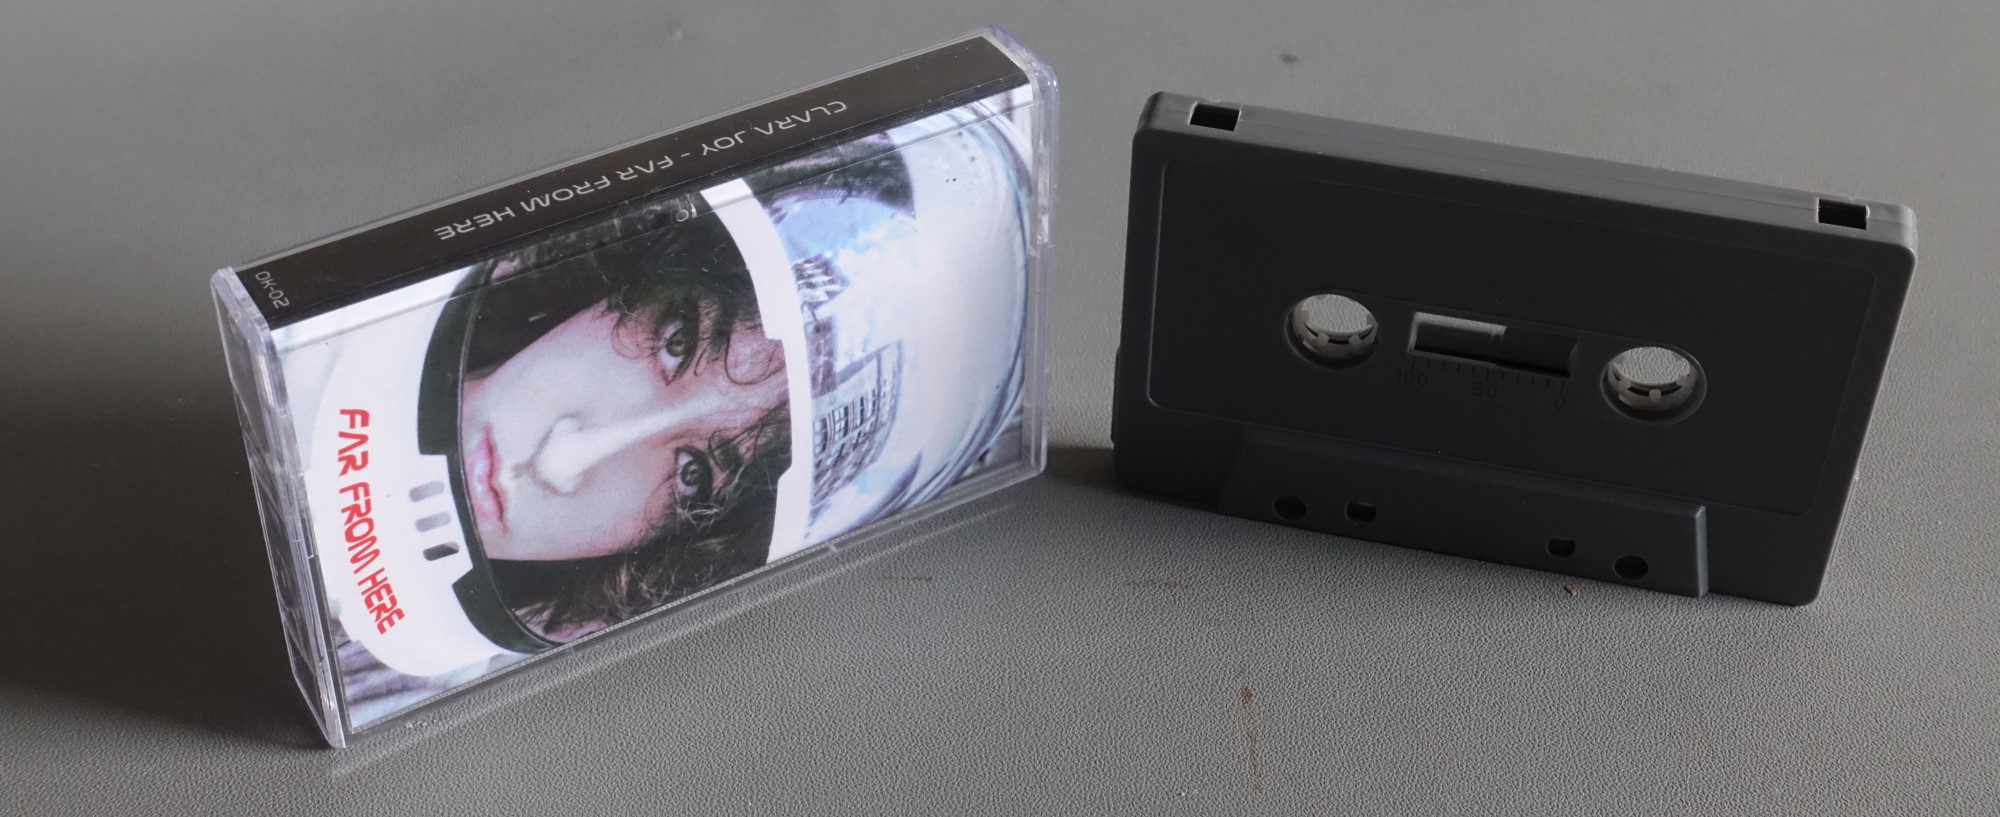 Clara Joy cassette